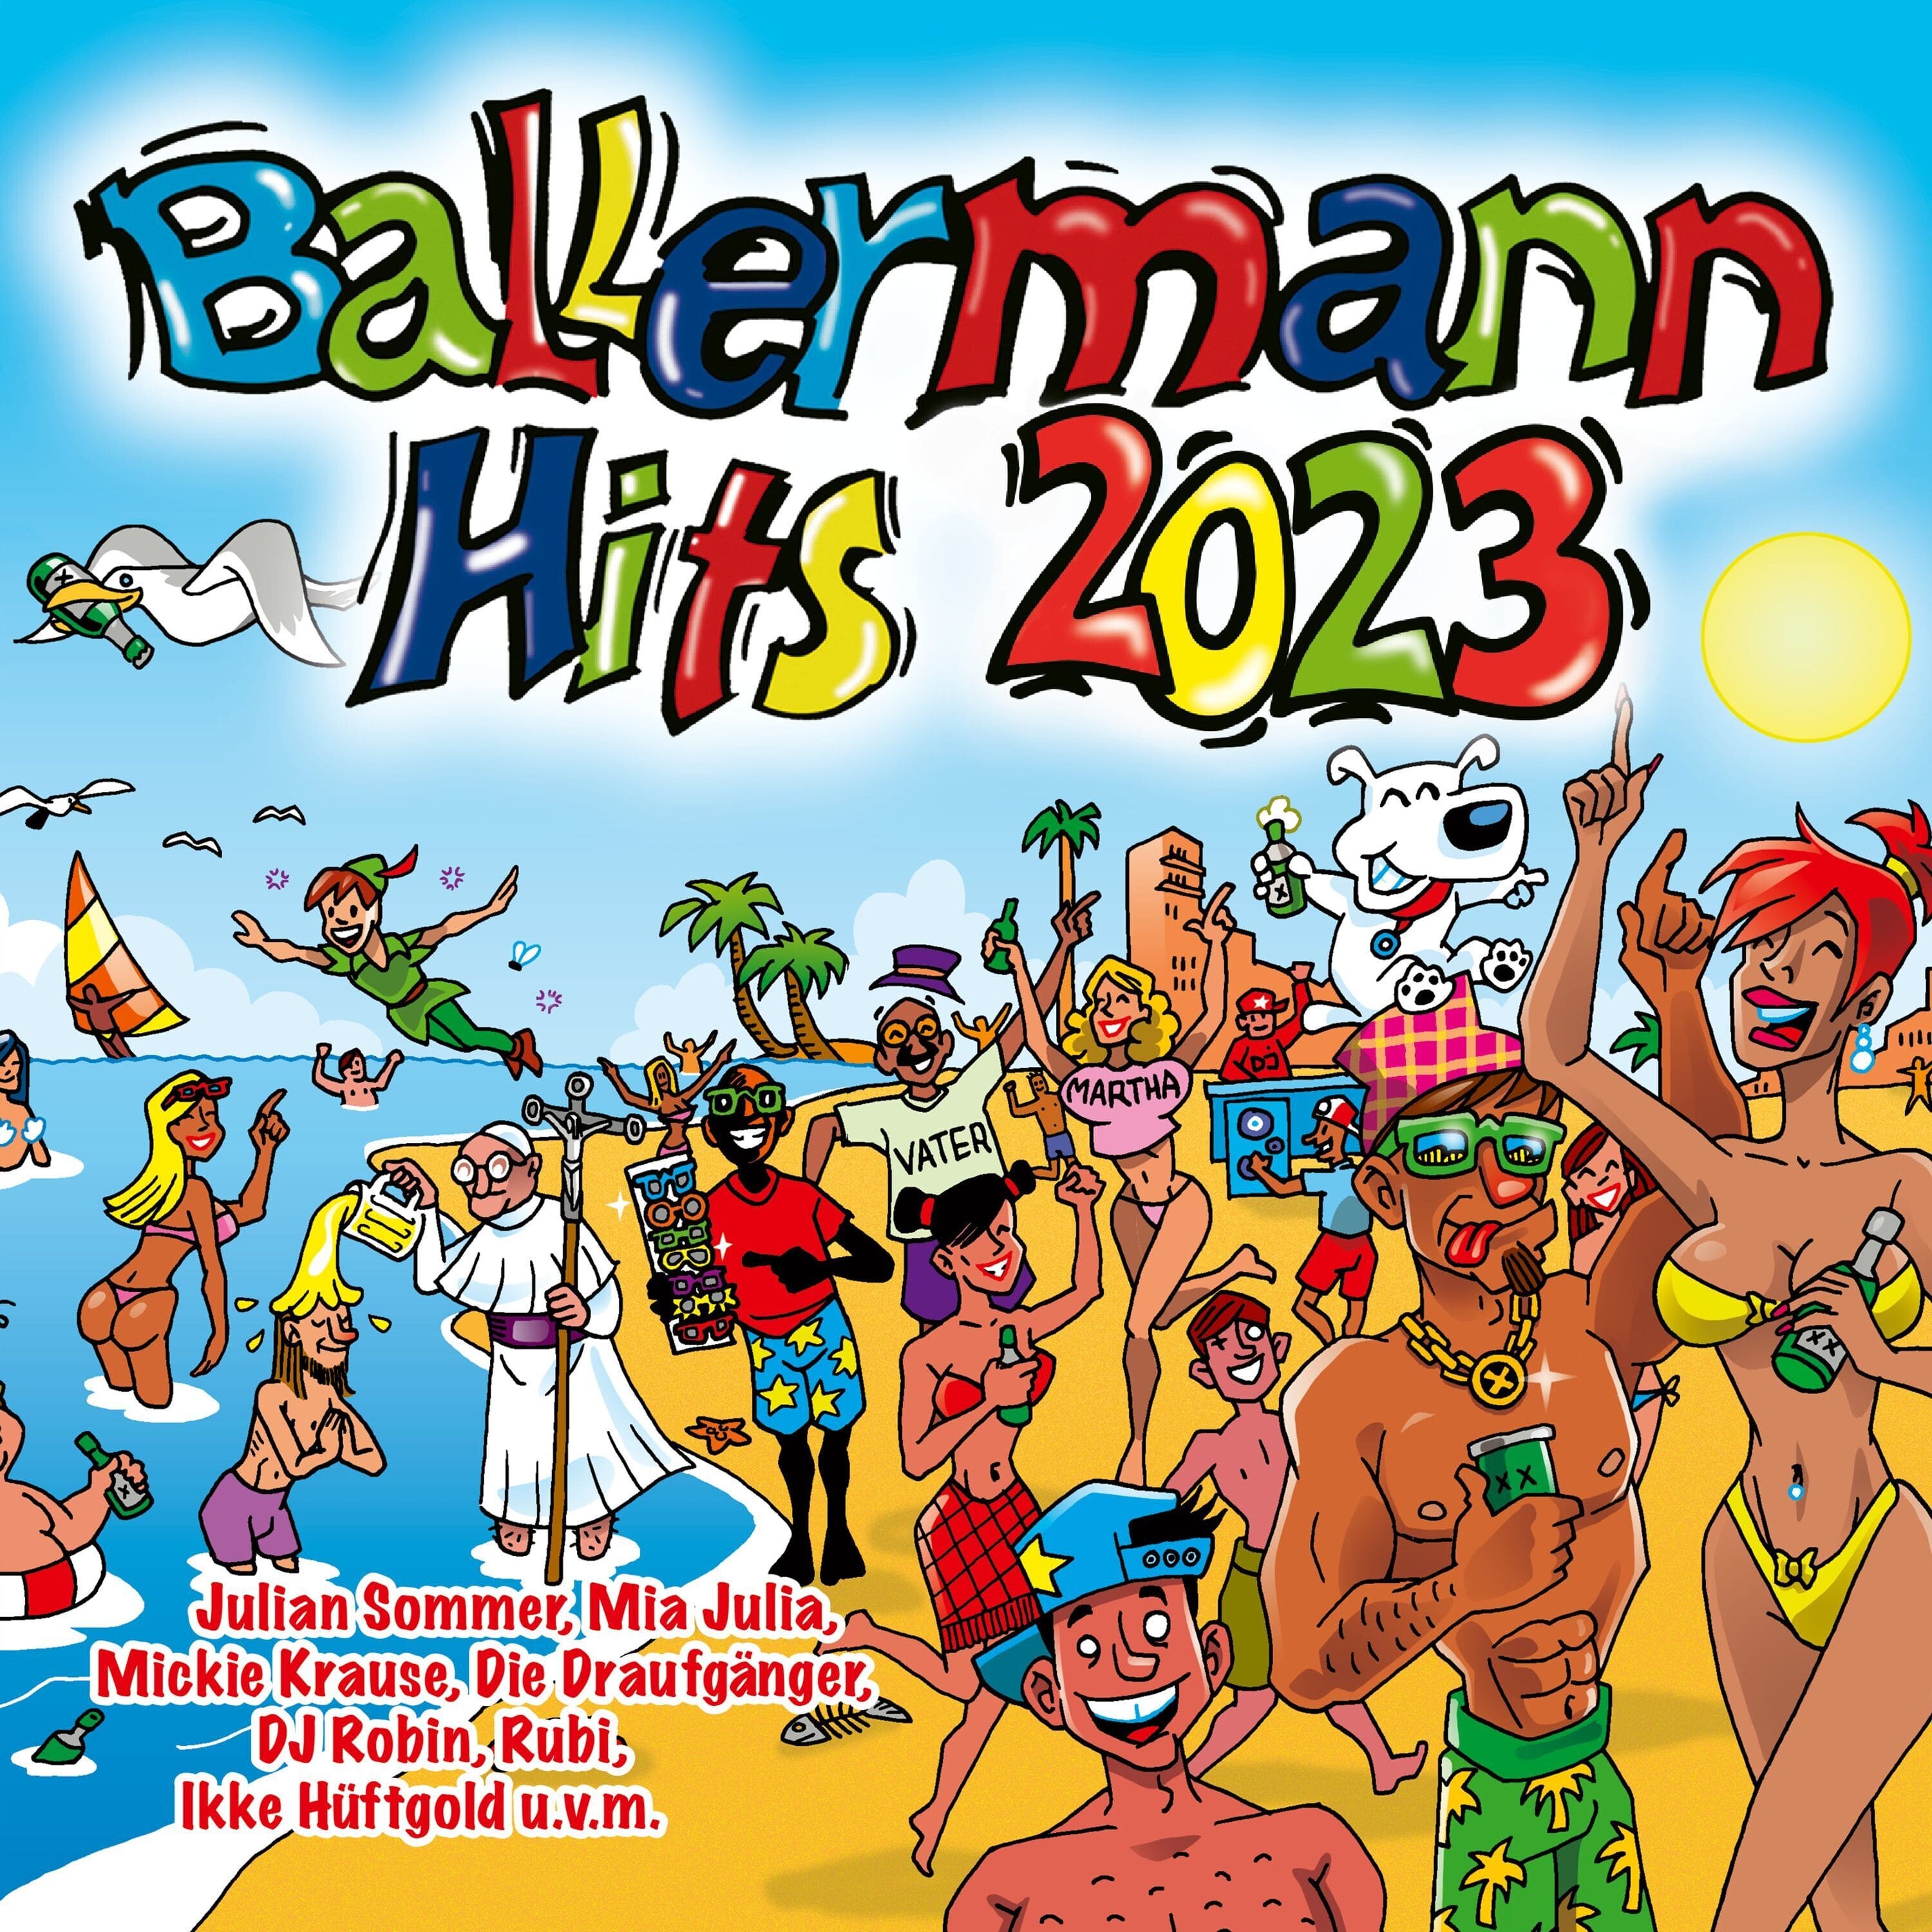 Bravado - Ballermann Hits 2023 - Various Artists - 2CD